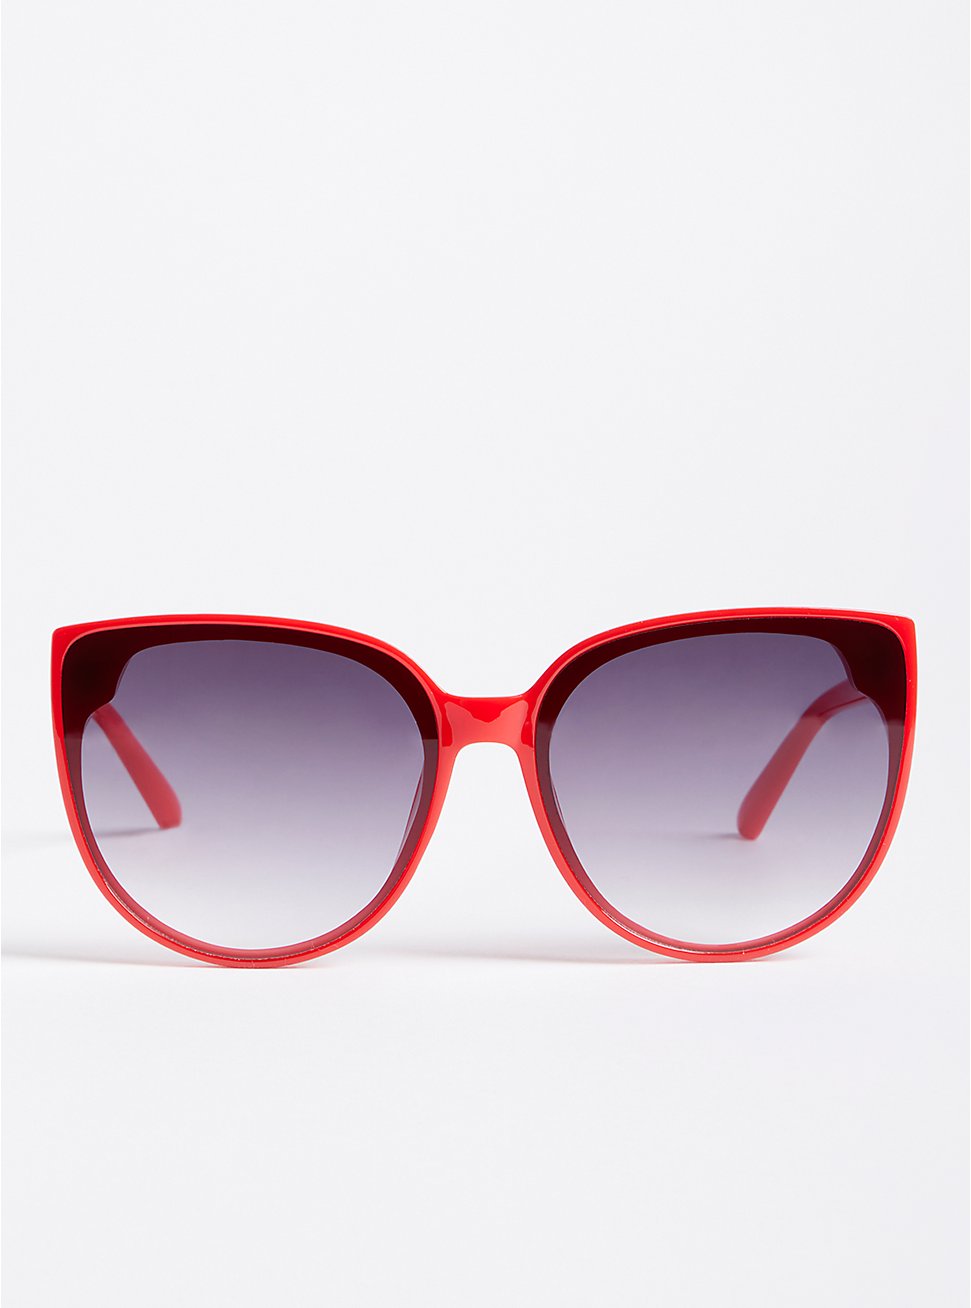 Cateye Sunglasses - Smoke Lens Red, , hi-res